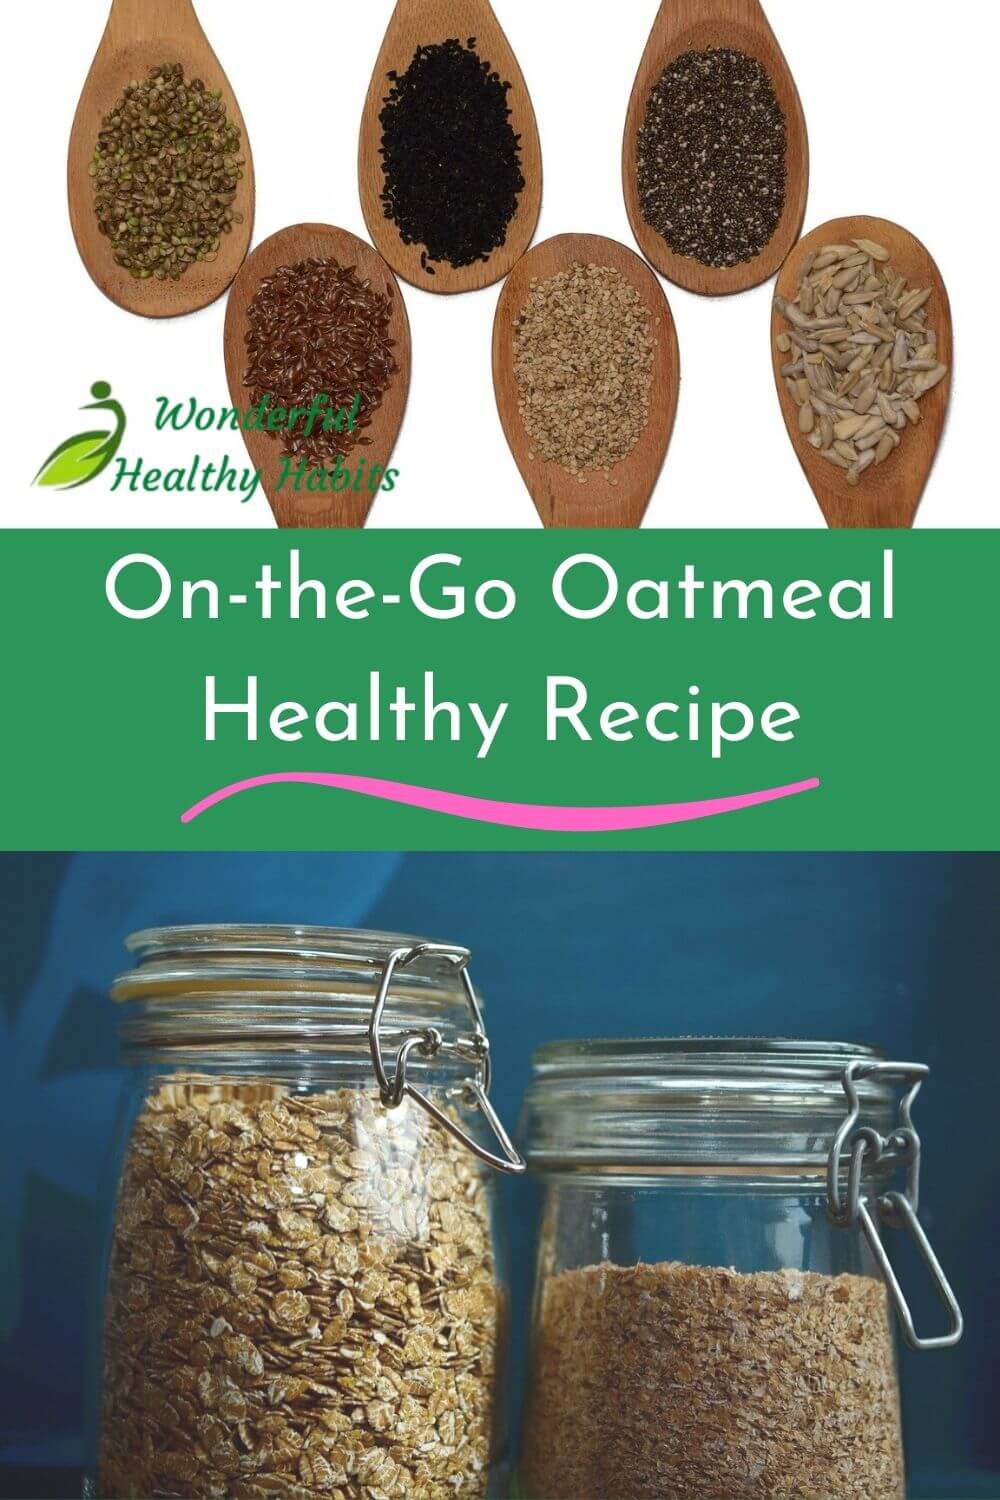 On-the-Go Oatmeal Healthy Recipe